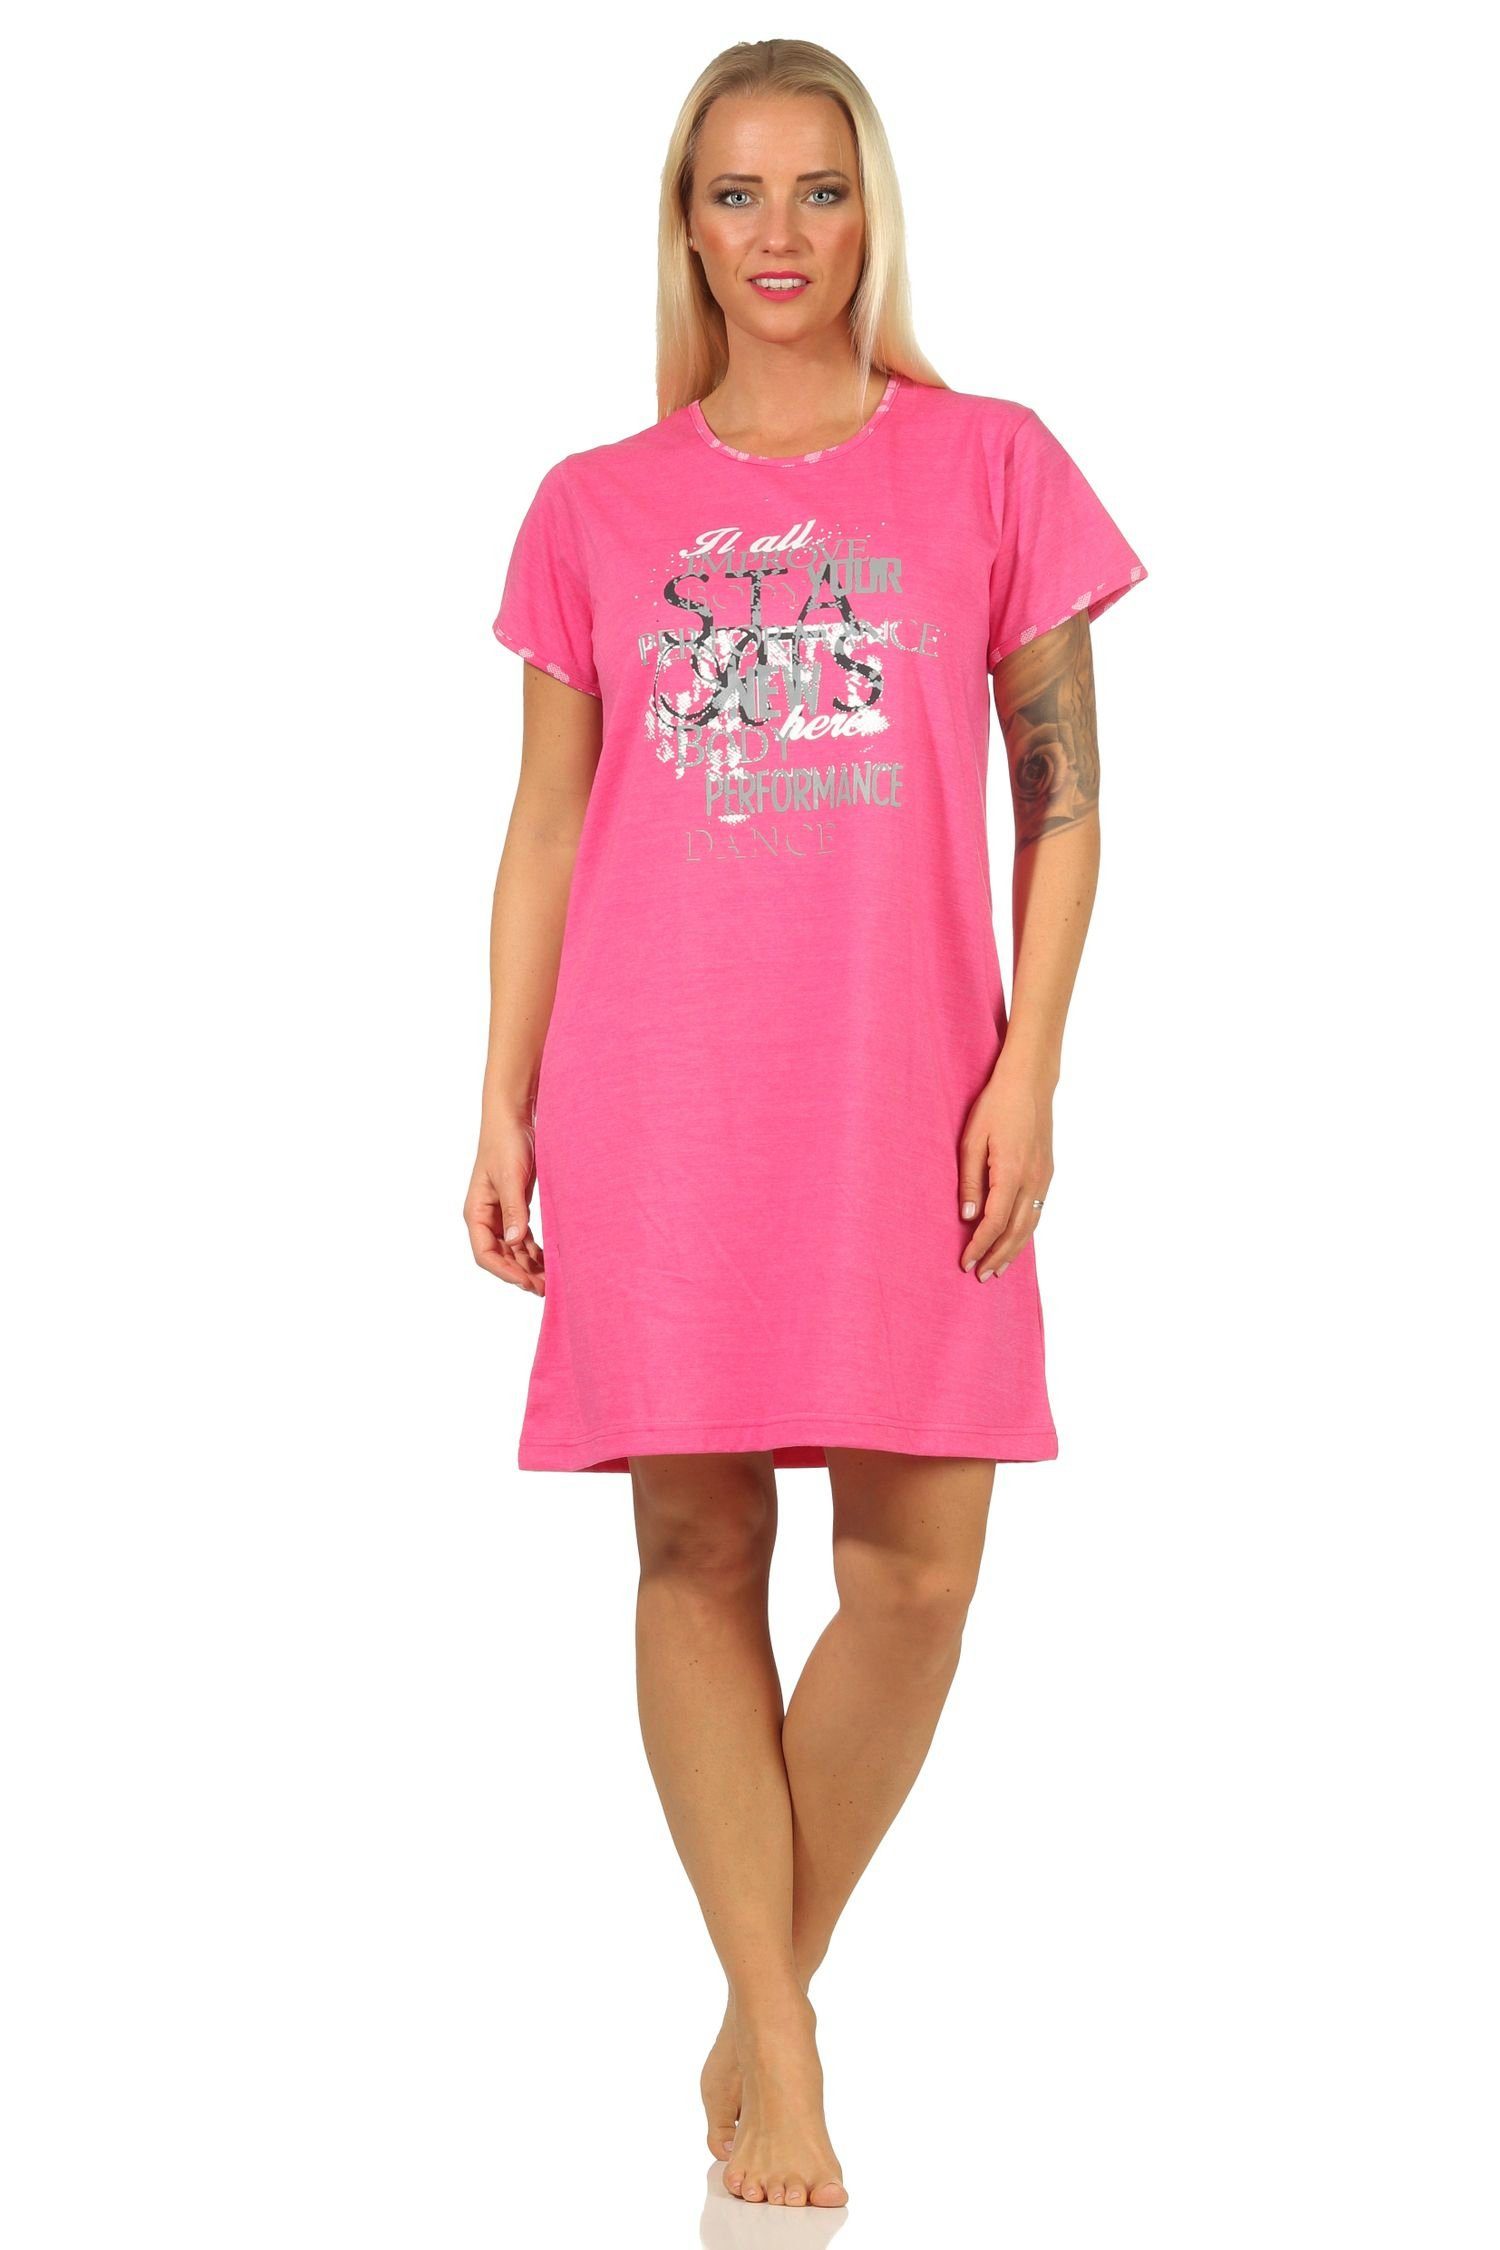 RELAX by Normann Nachthemd Damen kurzarm Nachthemd mit tollem Motiv - 67140 pink